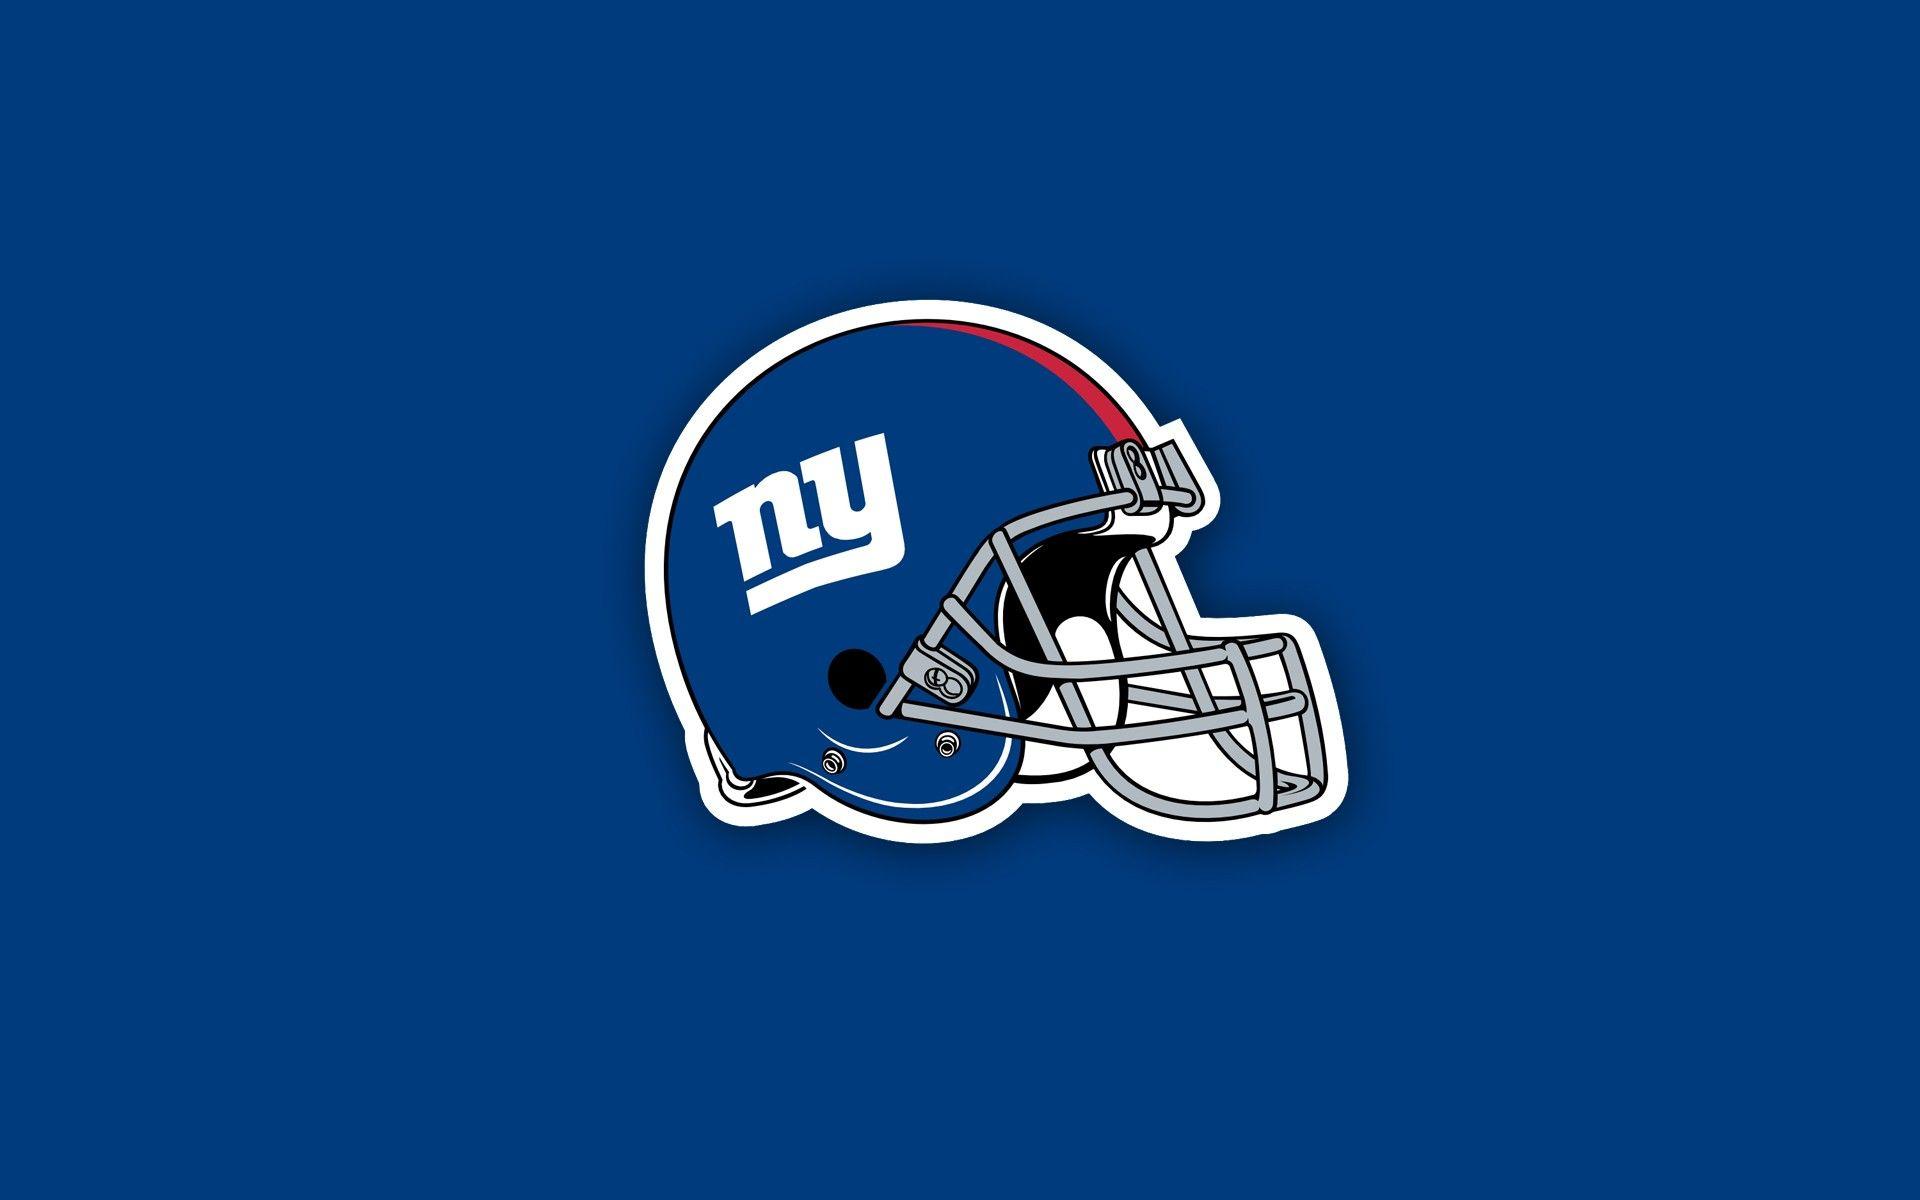 New York Giants Pics. Beautiful image HD Picture & Desktop Wallpaper